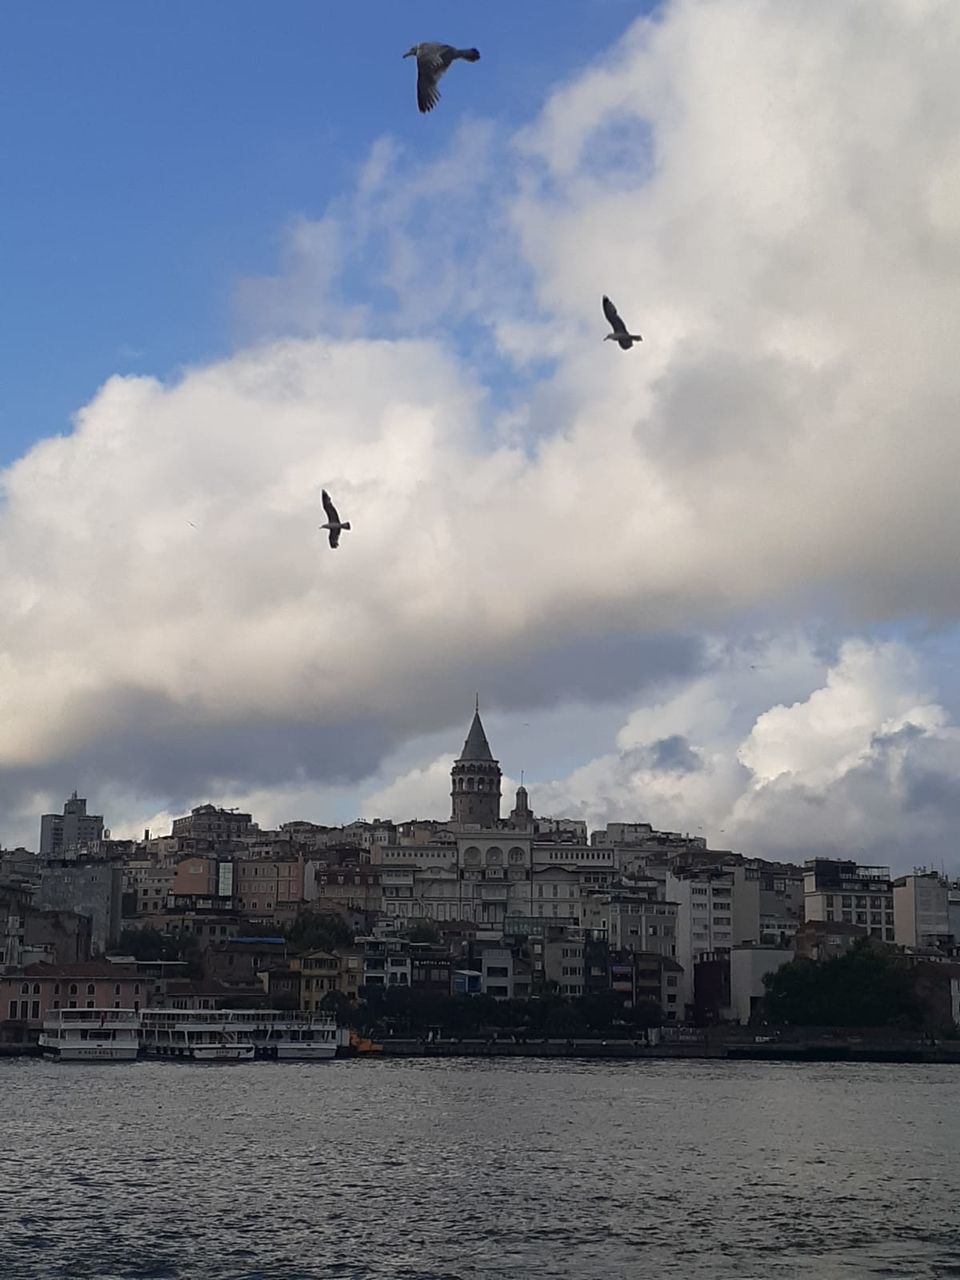 BIRDS FLYING ABOVE BUILDINGS IN CITY